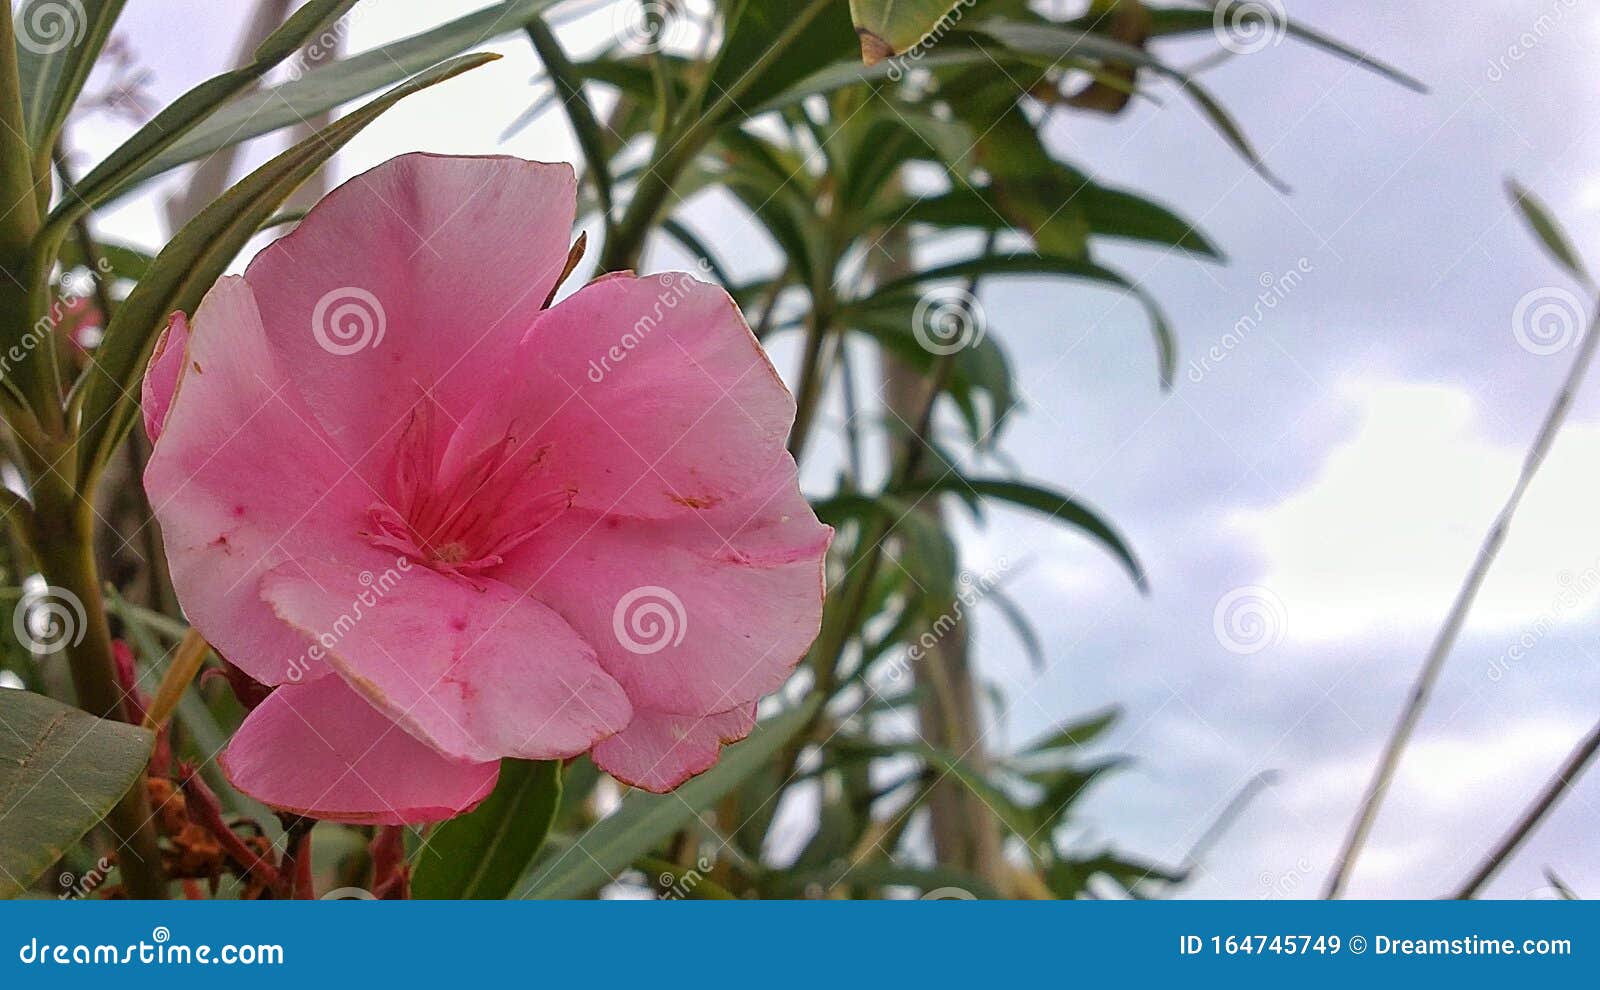 beautiful pink flower - hermosa flor rosa